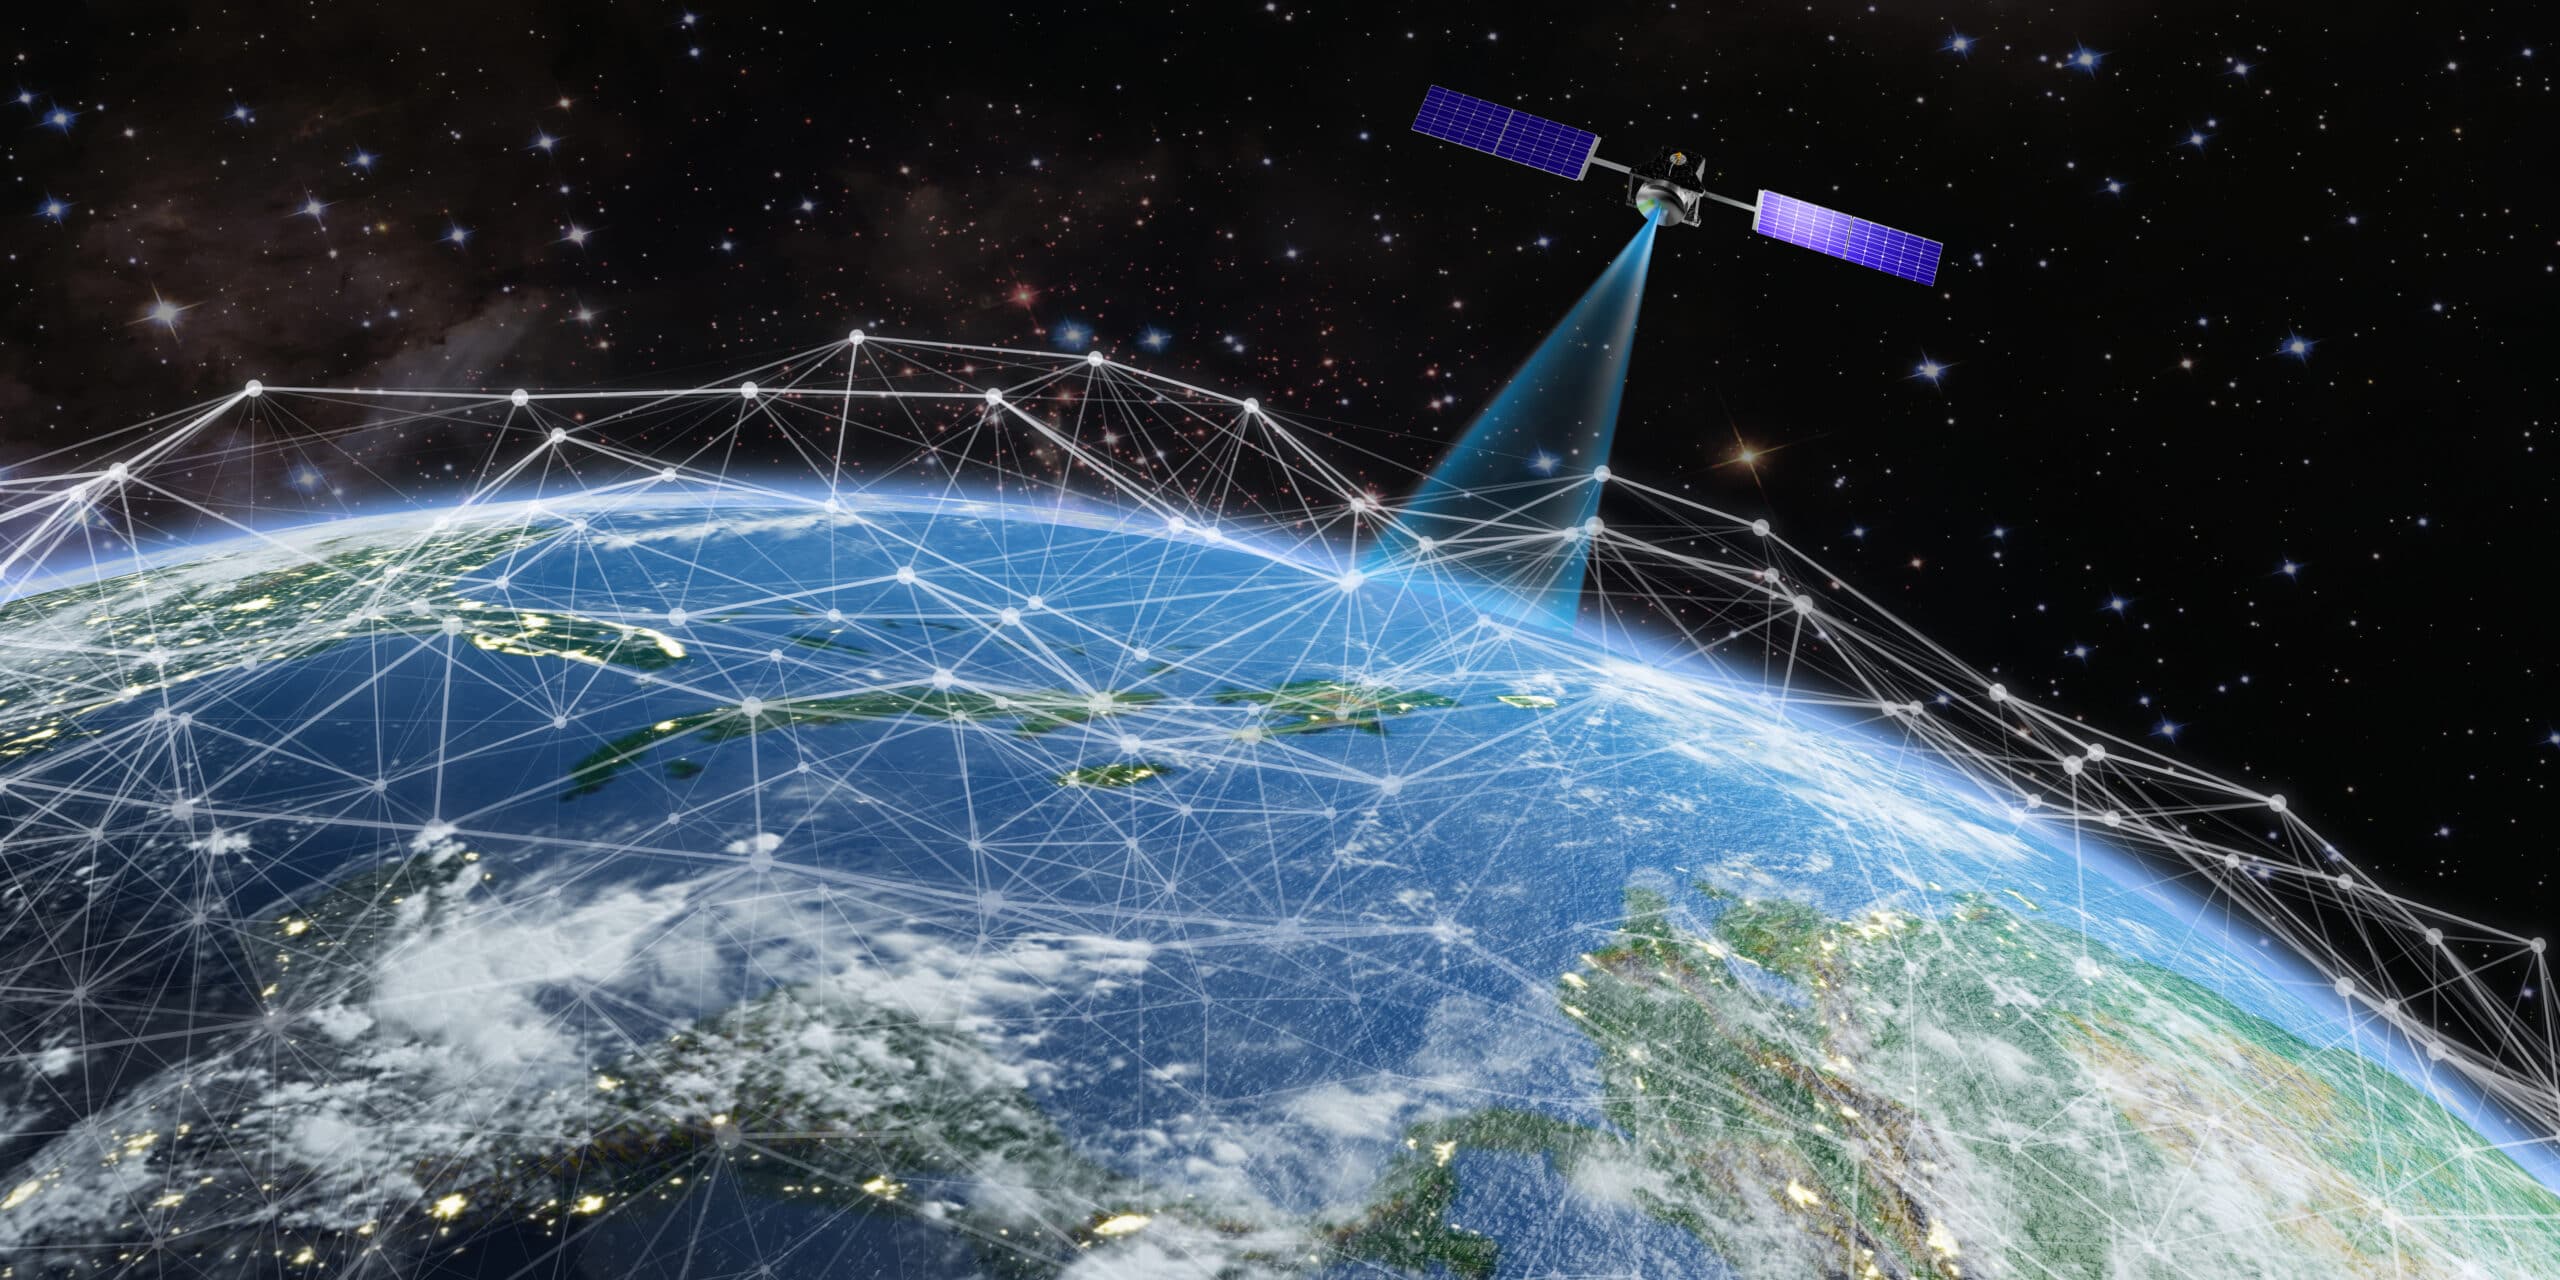 Satellite transmits a signal